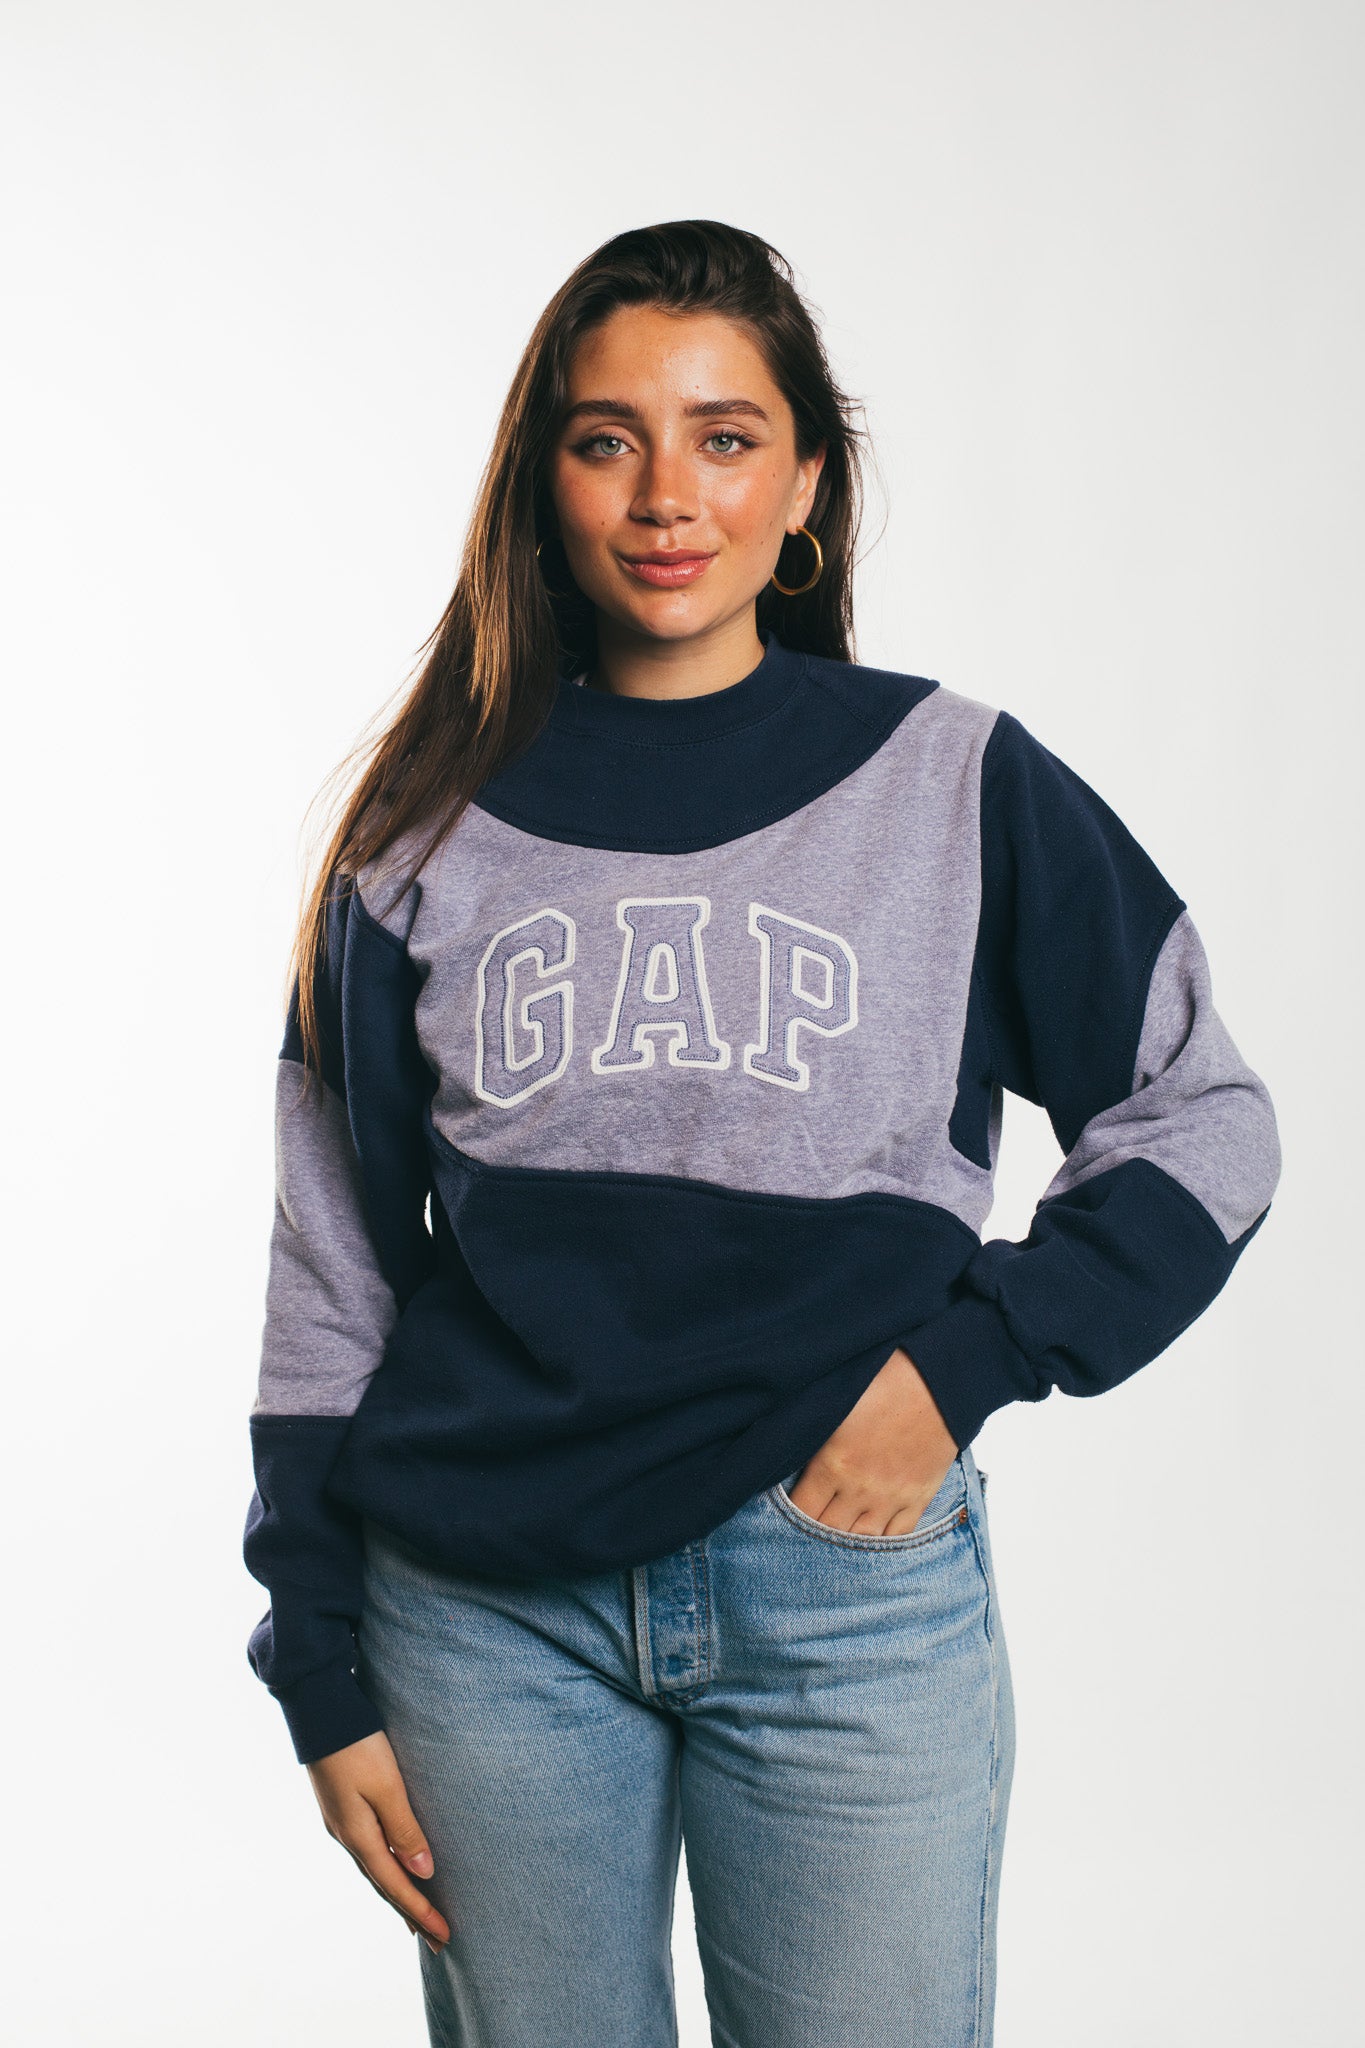 GAP - Sweatshirt (M)